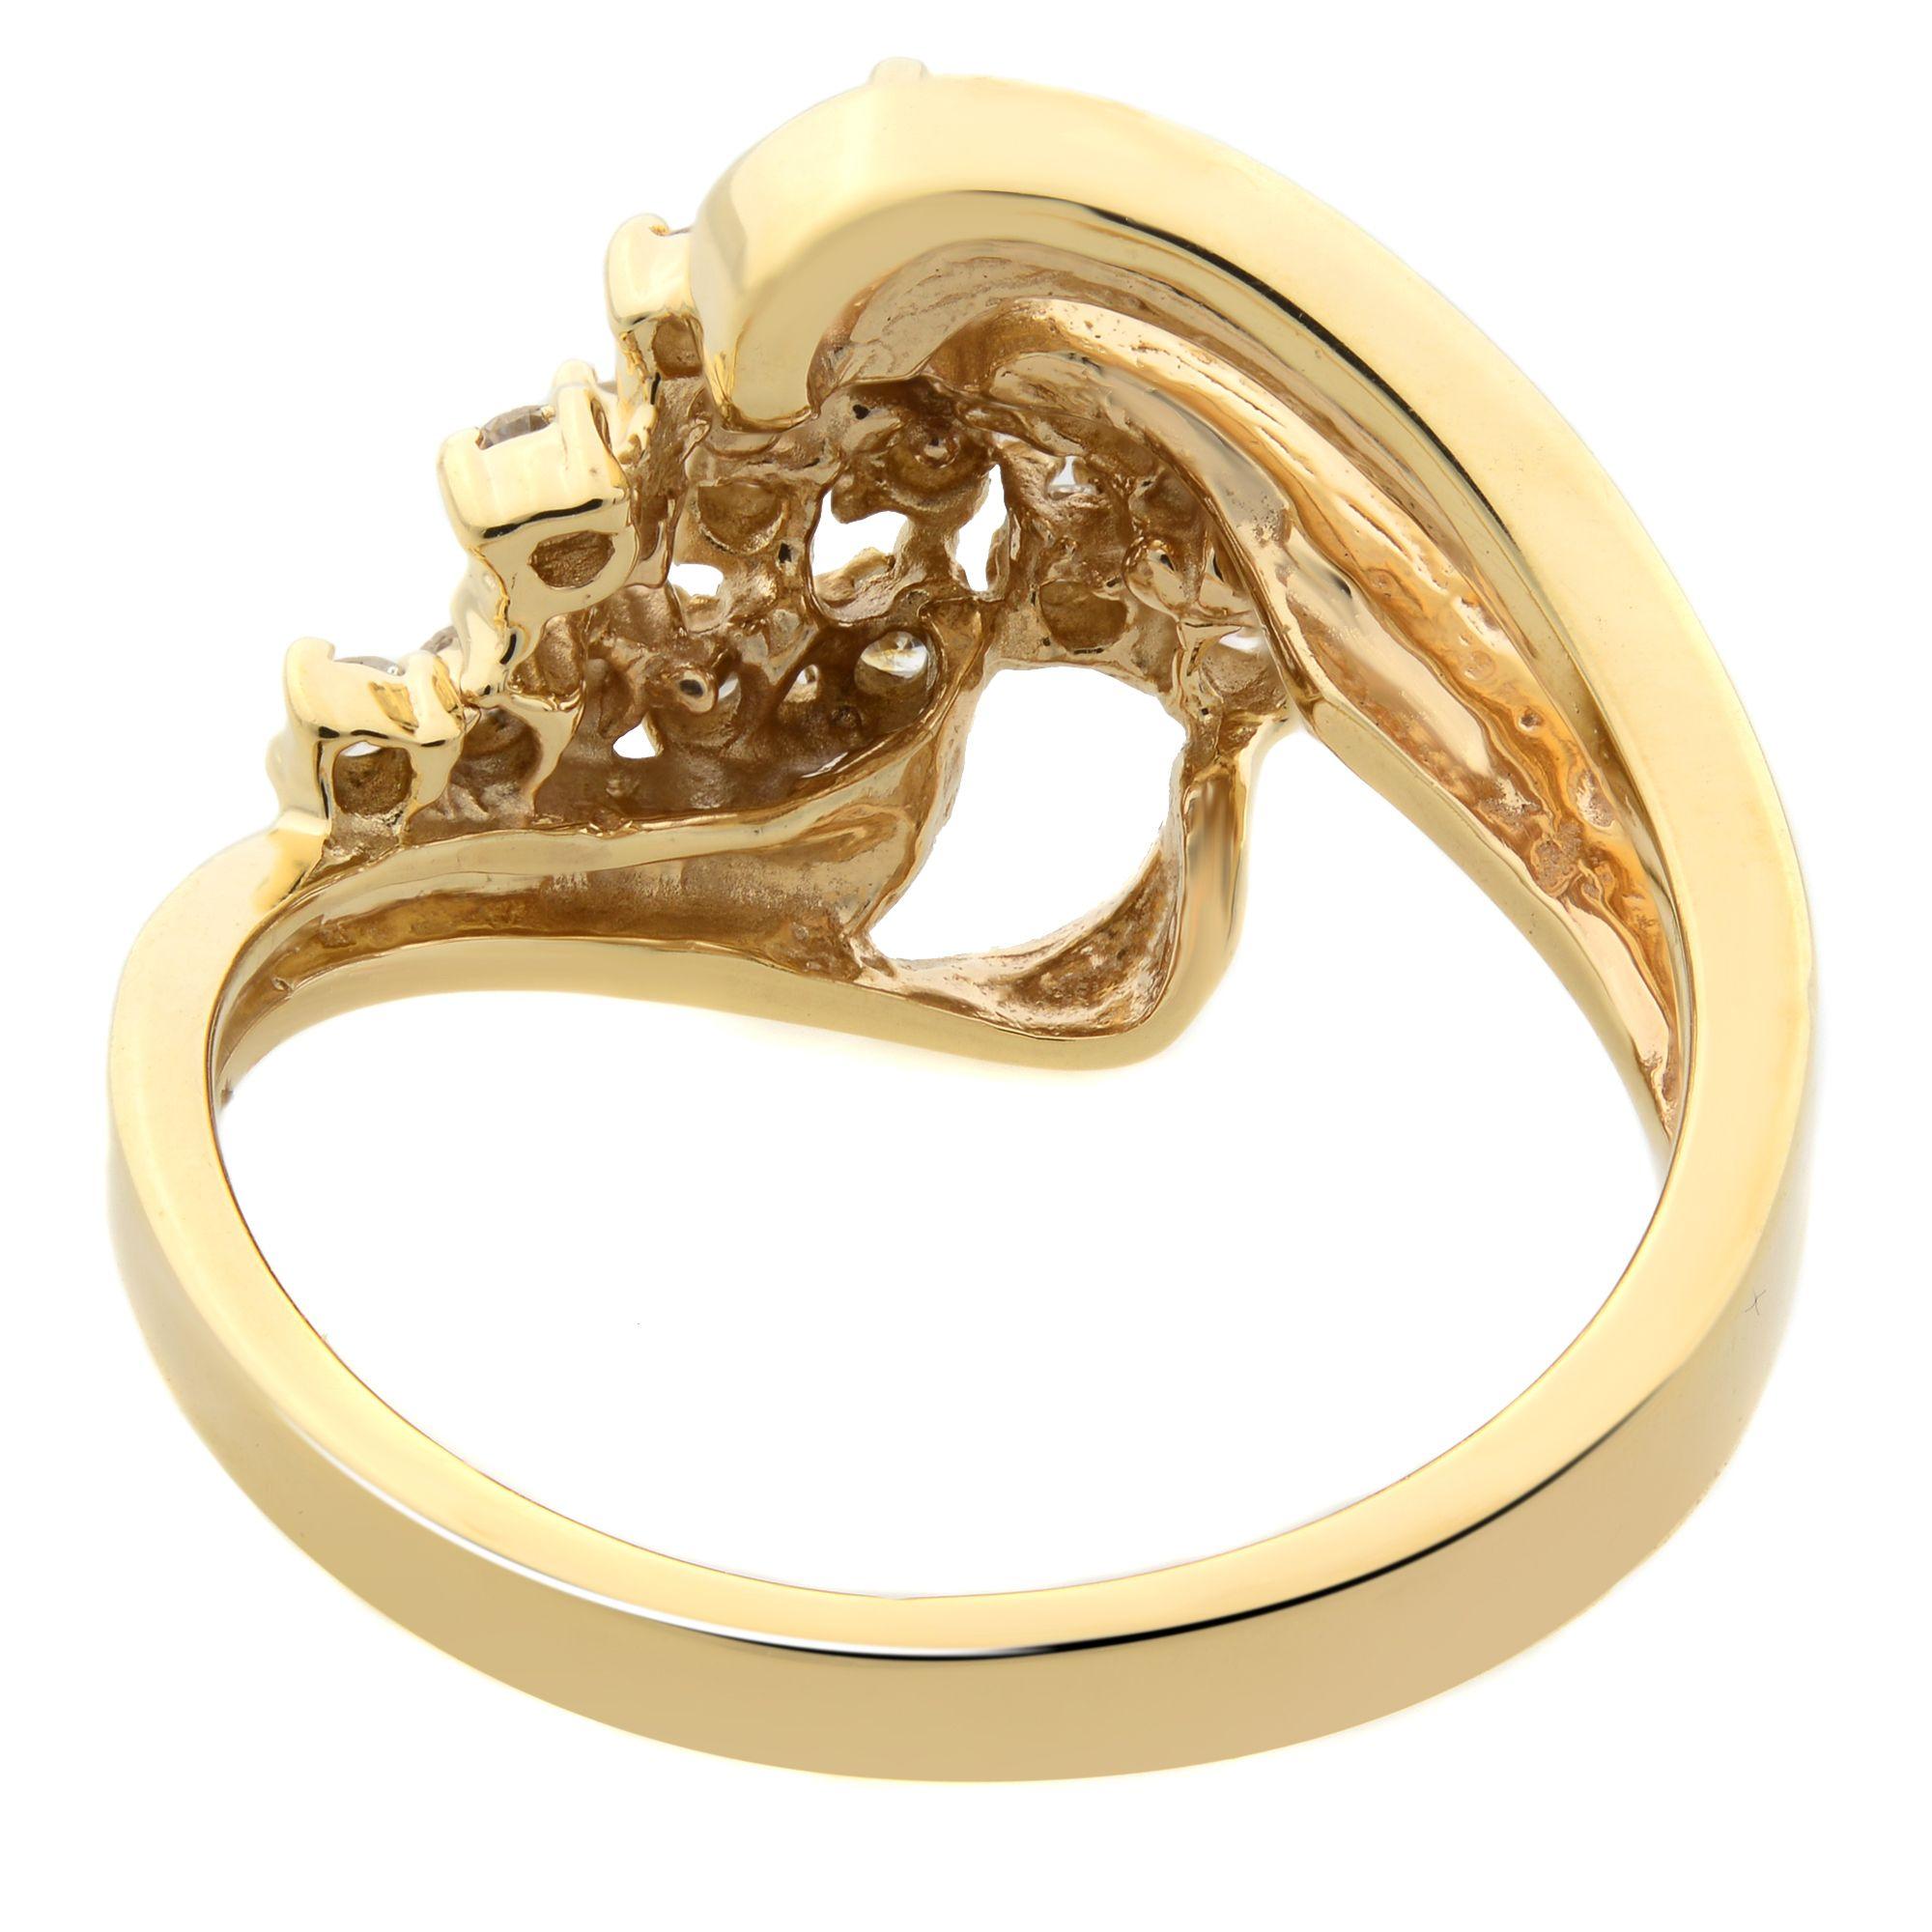 Rachel Koen 14 Karat Yellow Gold Diamond Cocktail Ring 0.25 Carat In New Condition For Sale In New York, NY